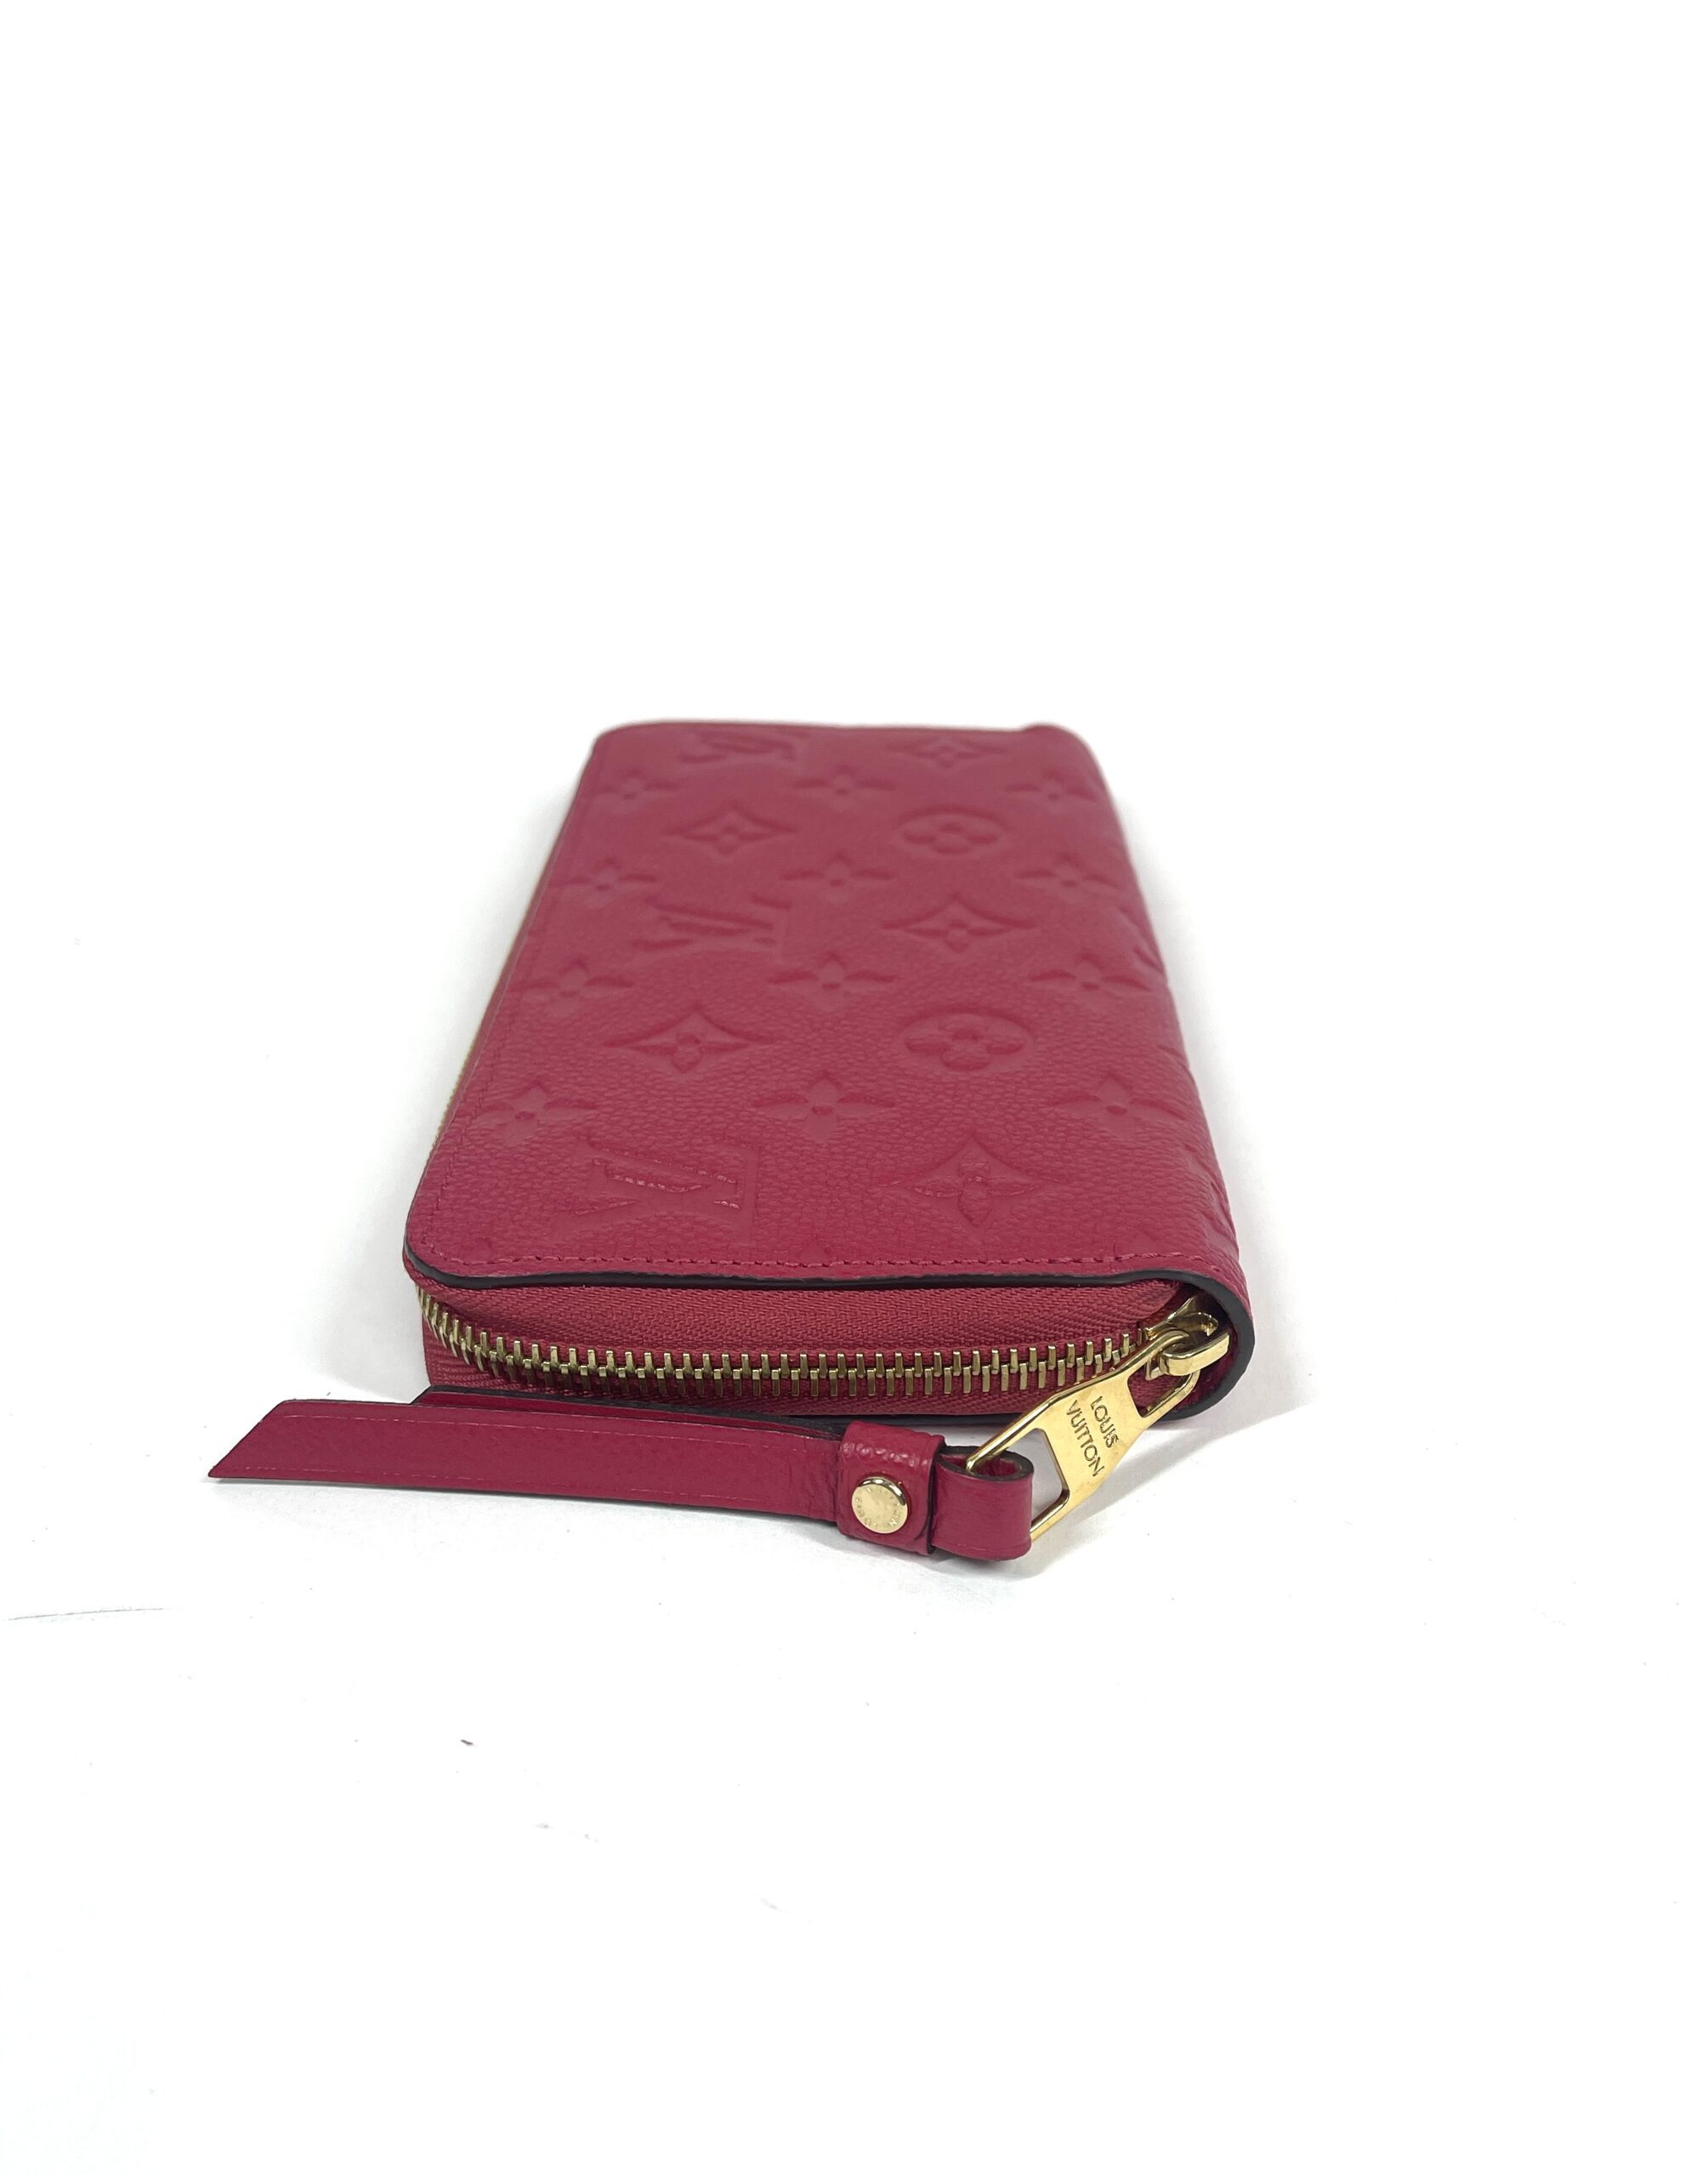 Louis Vuitton 2015 Empreinte Leather Wallet - Red Wallets